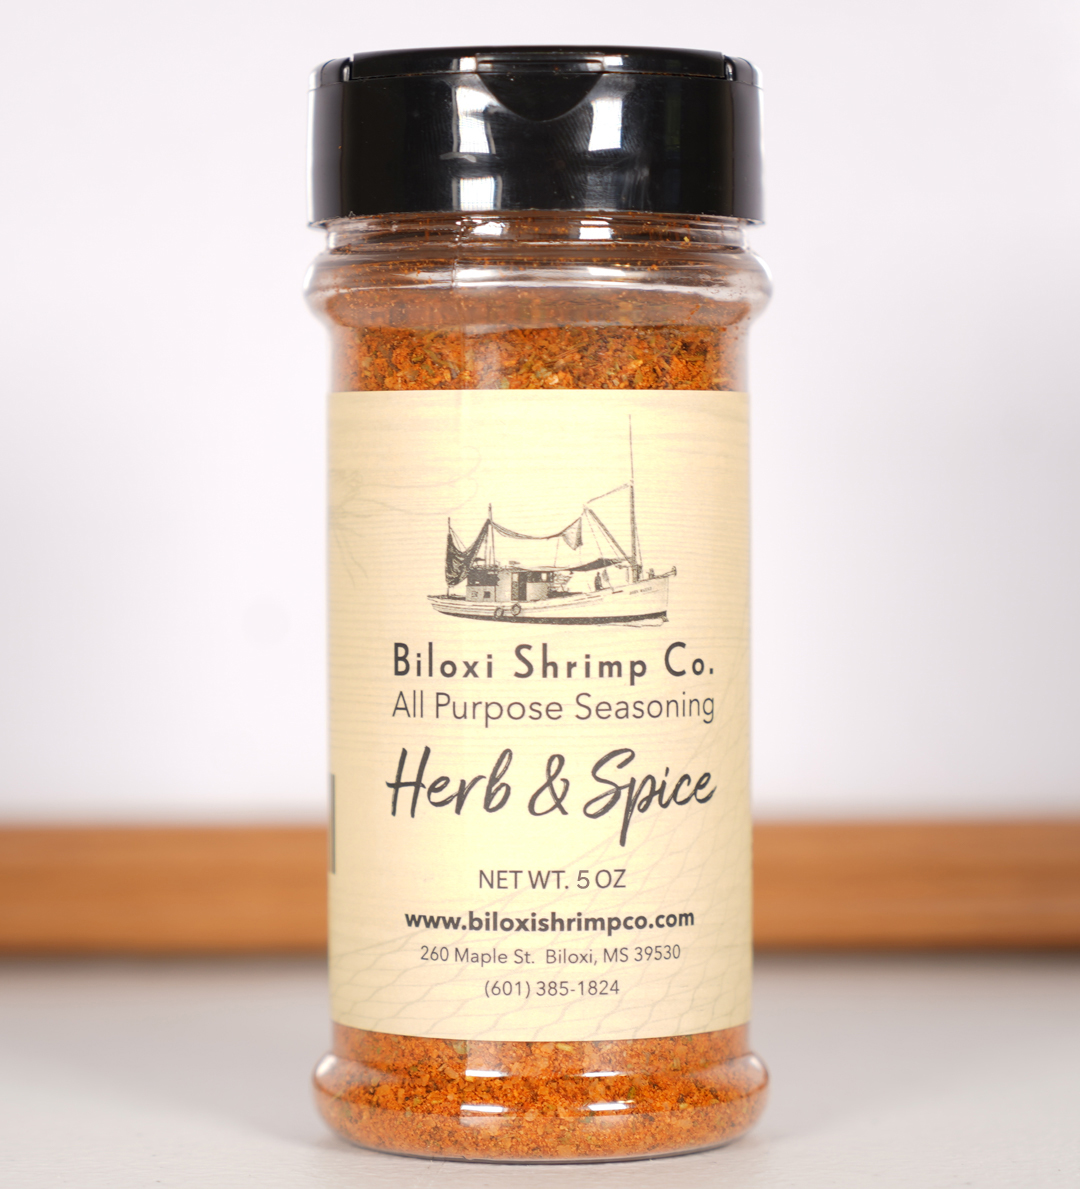 Biloxi Shrimp Co. Herb & Spice